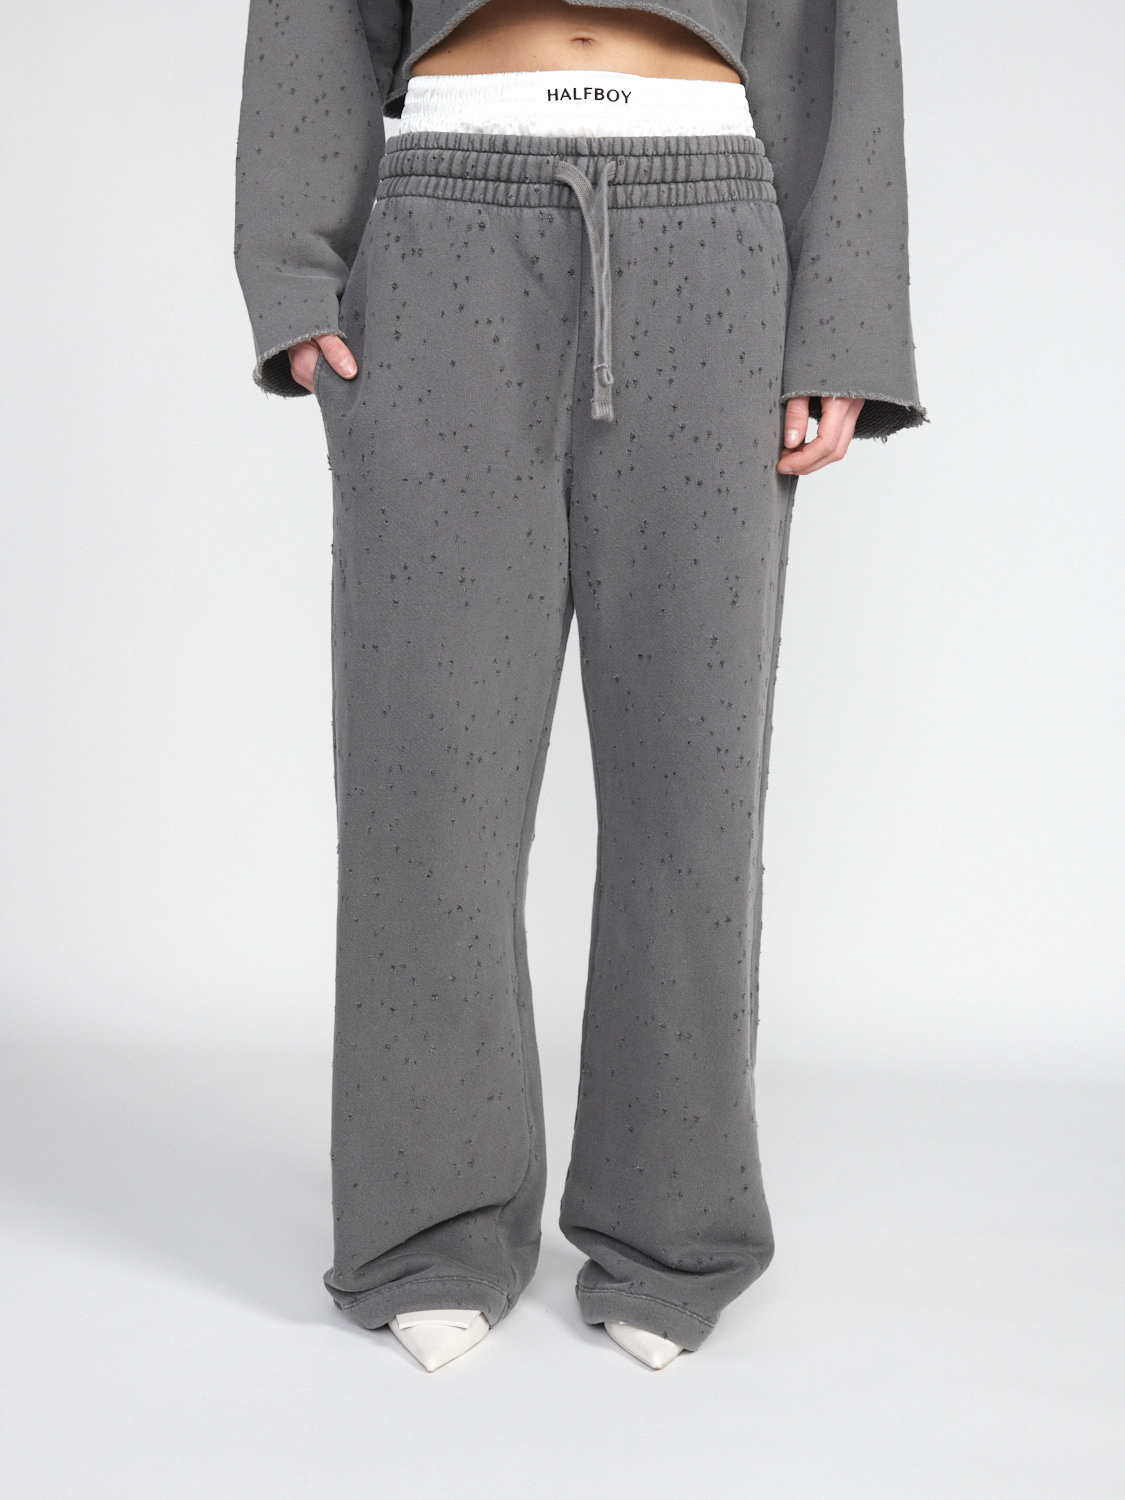 Halfboy Jogger - Jogging pants with wide leg   grey XS